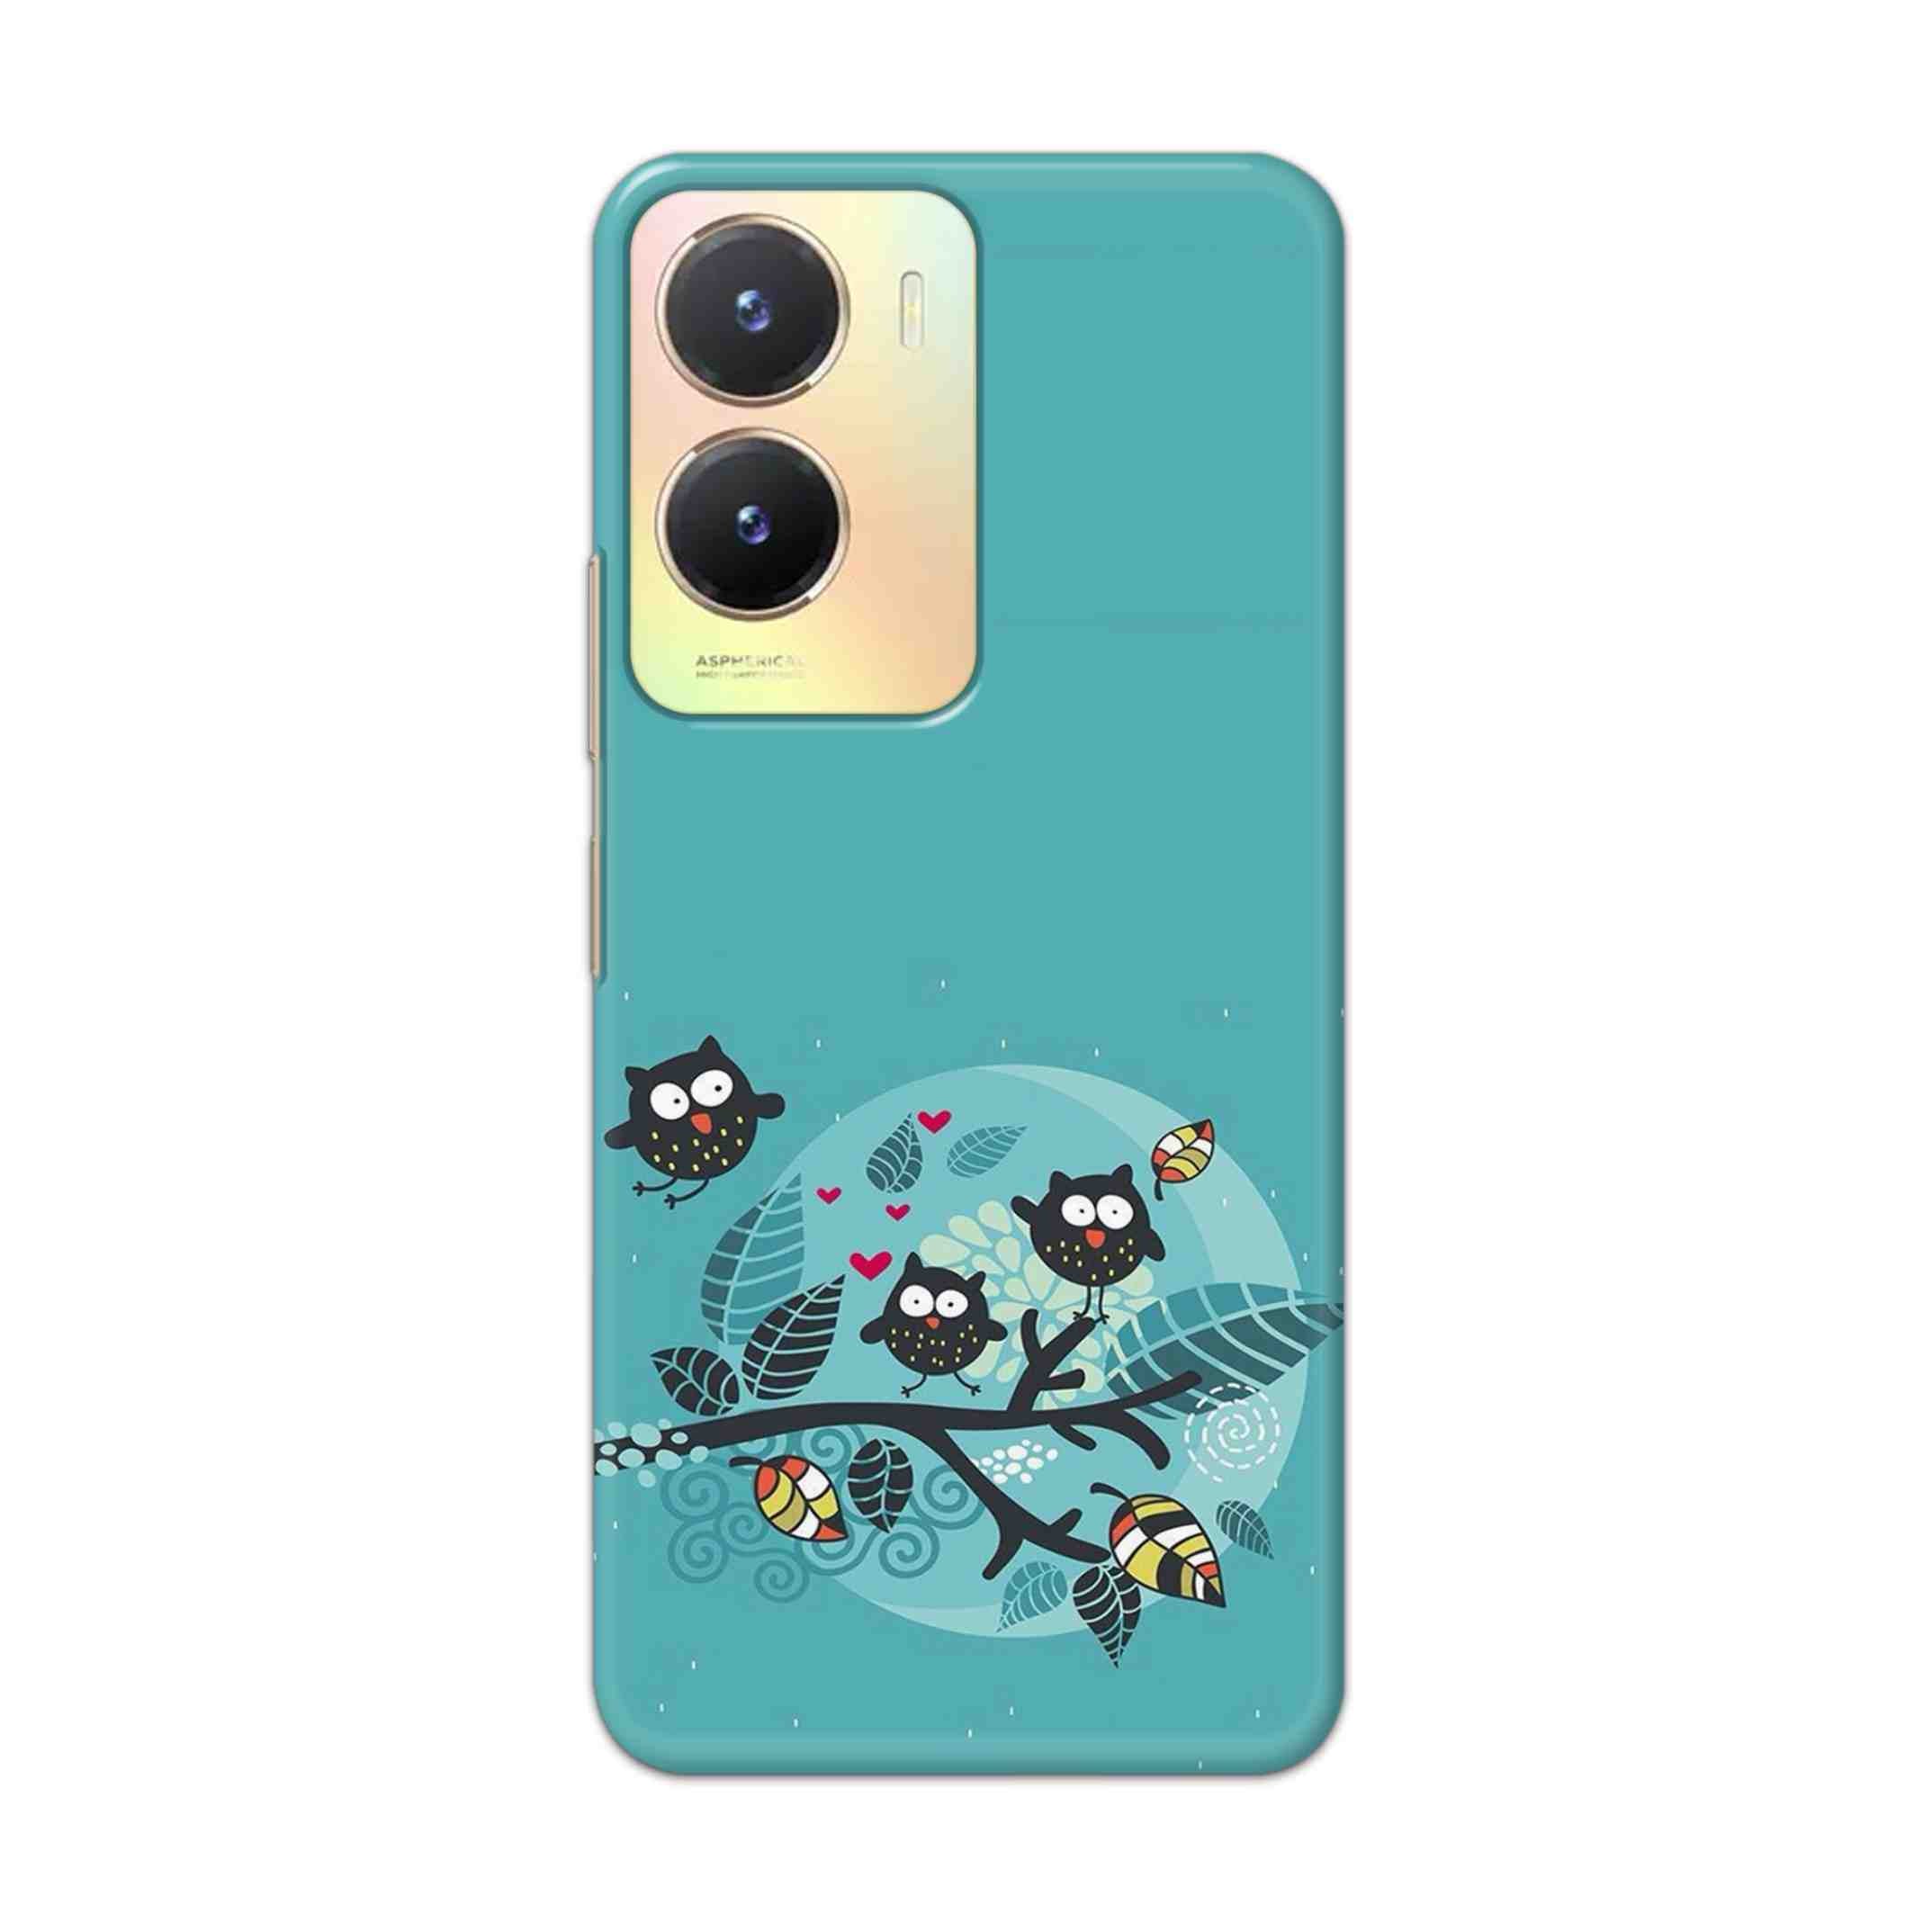 Buy Owl Hard Back Mobile Phone Case Cover For Vivo T2x Online